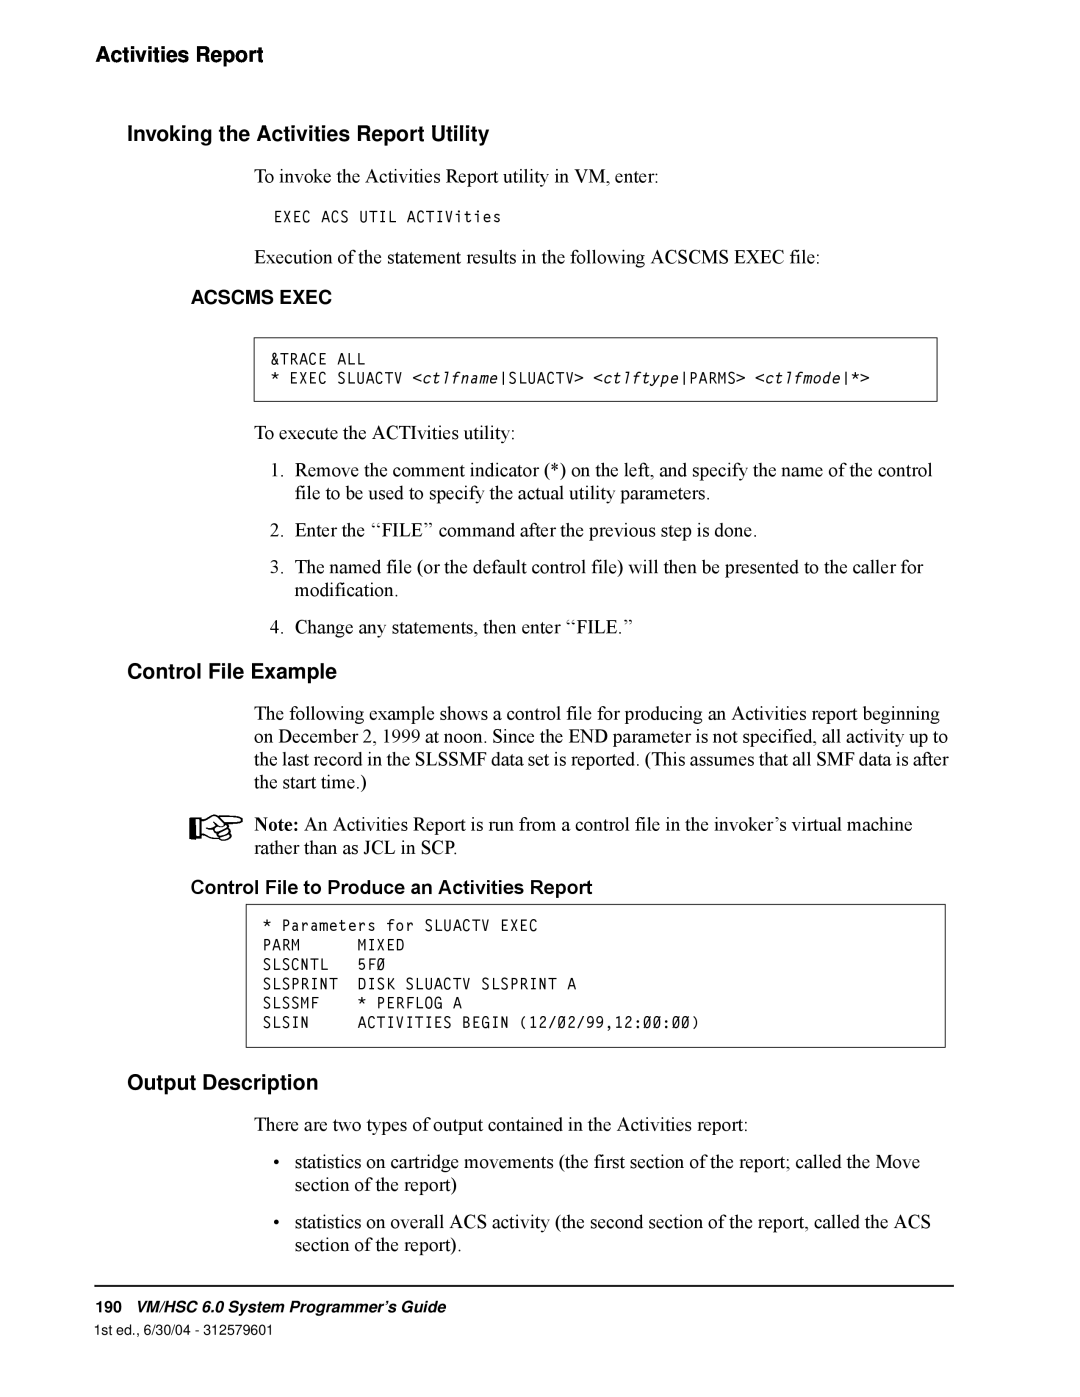 StorageTek 6 manual Invoking the Activities Report Utility, Control File Example, Output Description, Acscms Exec 